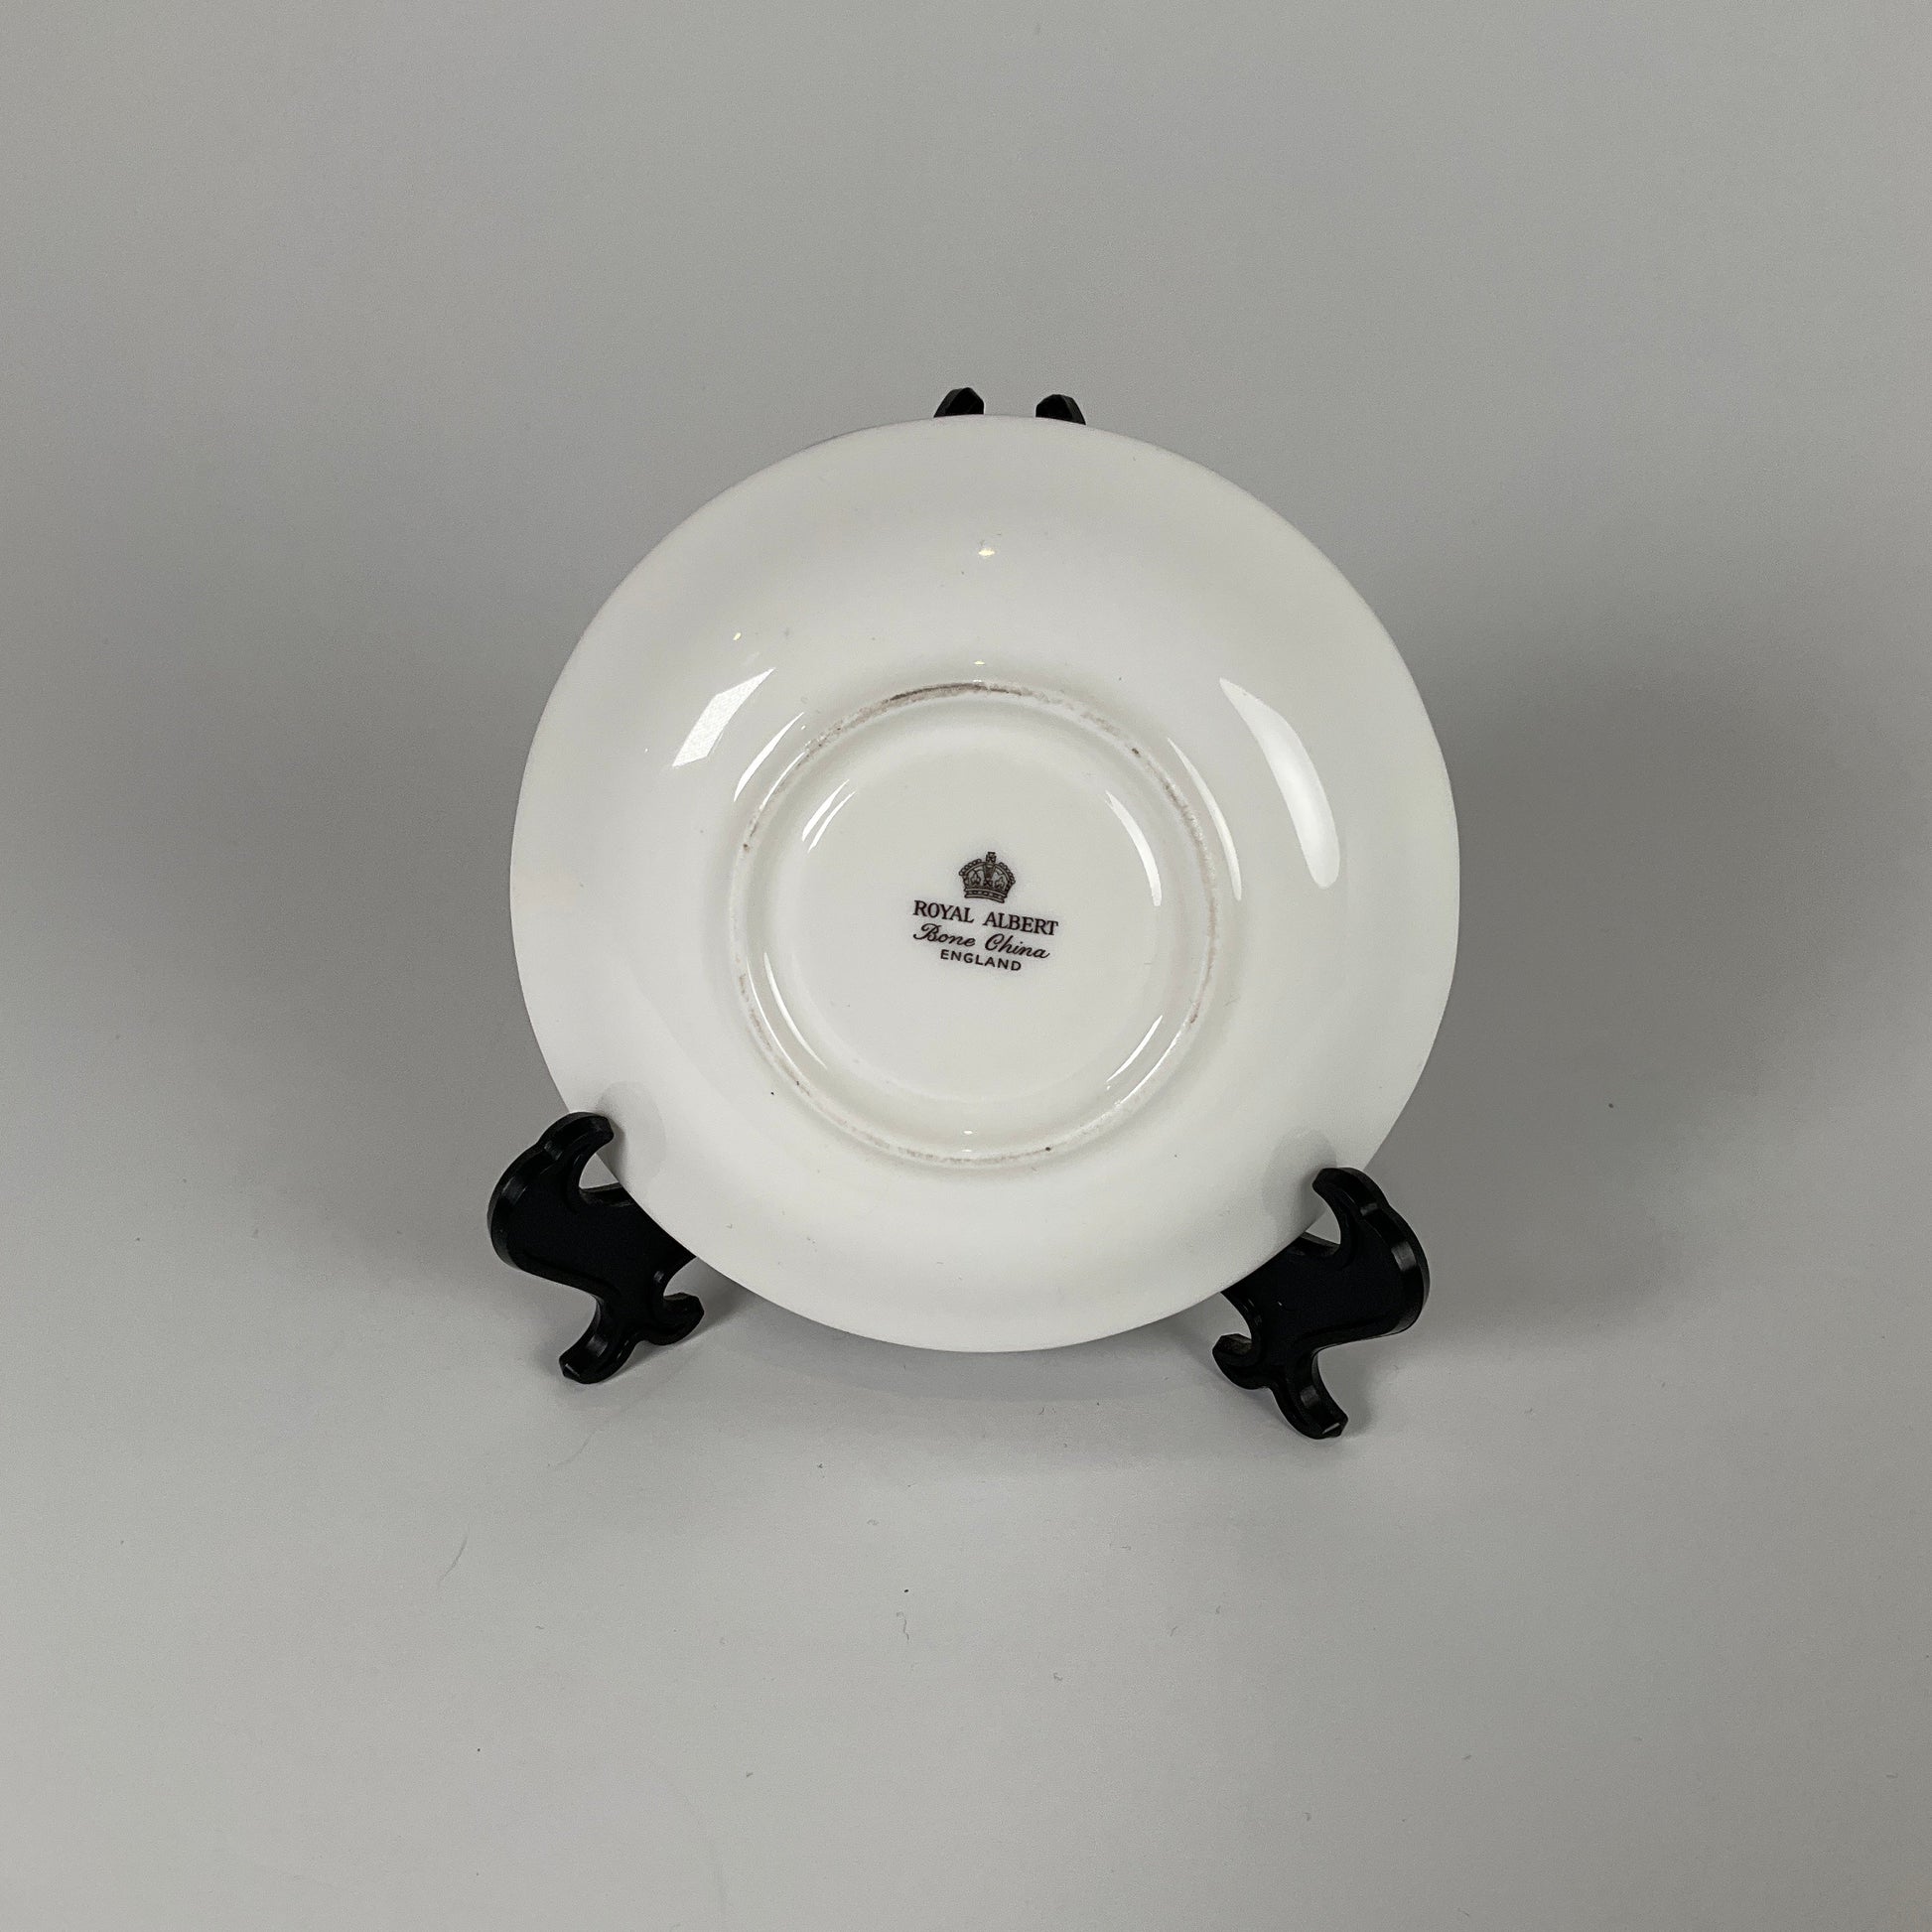 Royal Albert - Decorative Miniature Anniversary Plate Collectibles